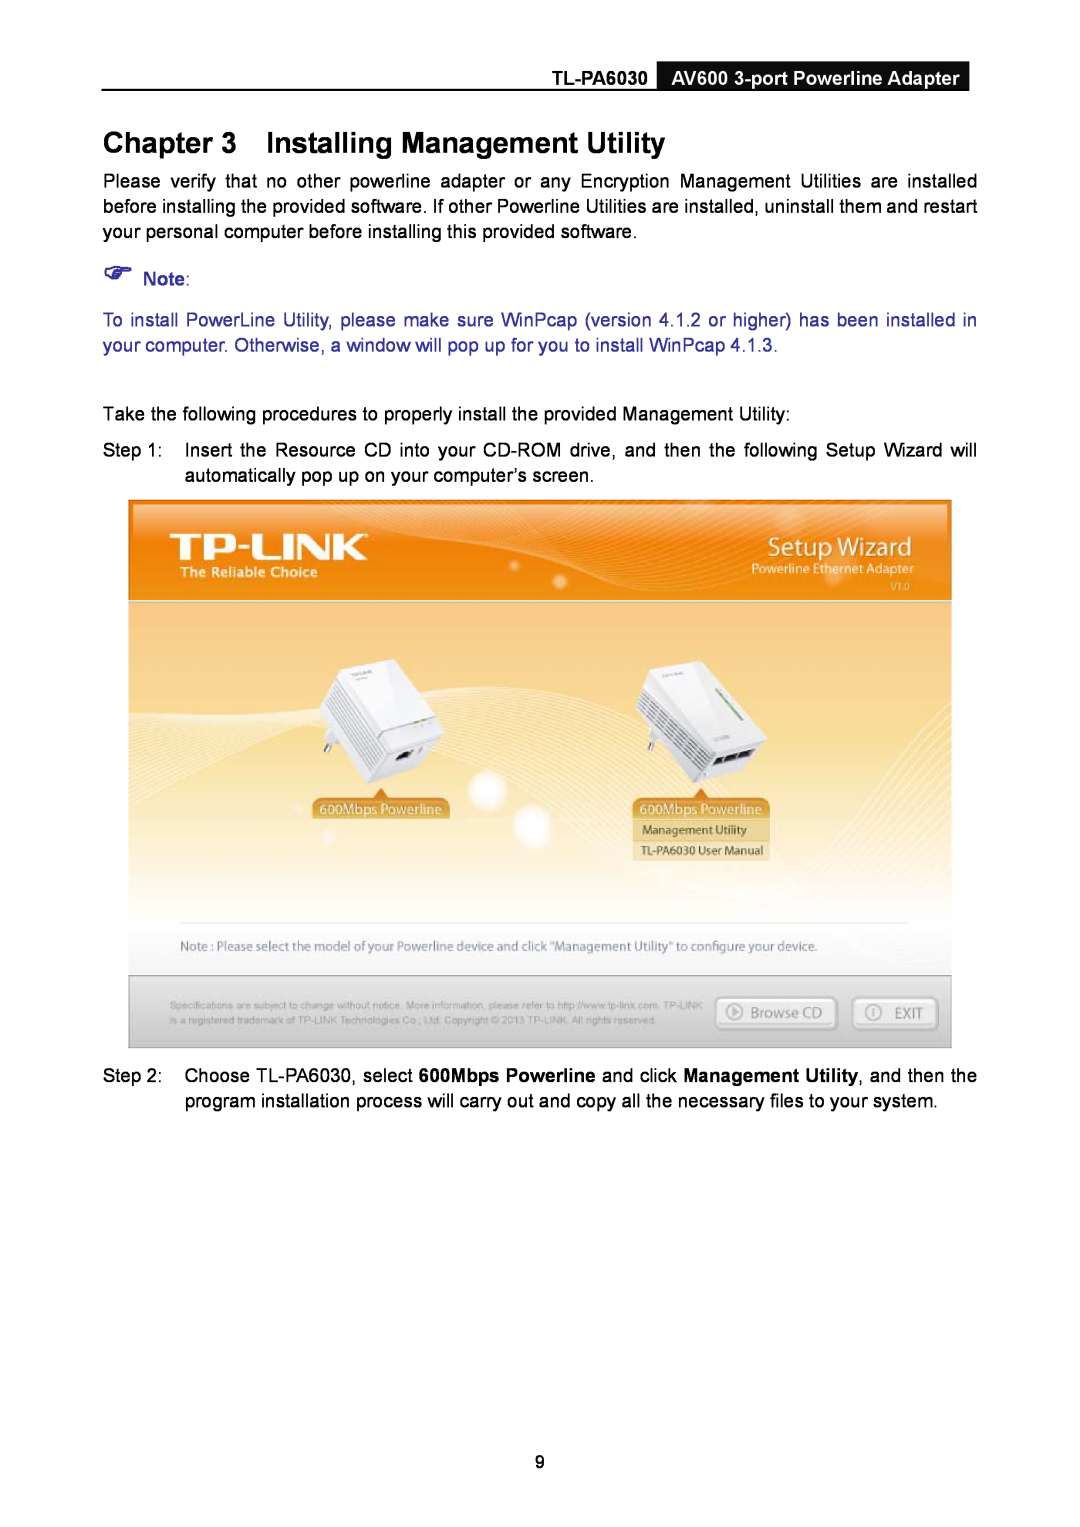 TP-Link manual Installing Management Utility, TL-PA6030 AV600 3-port Powerline Adapter 